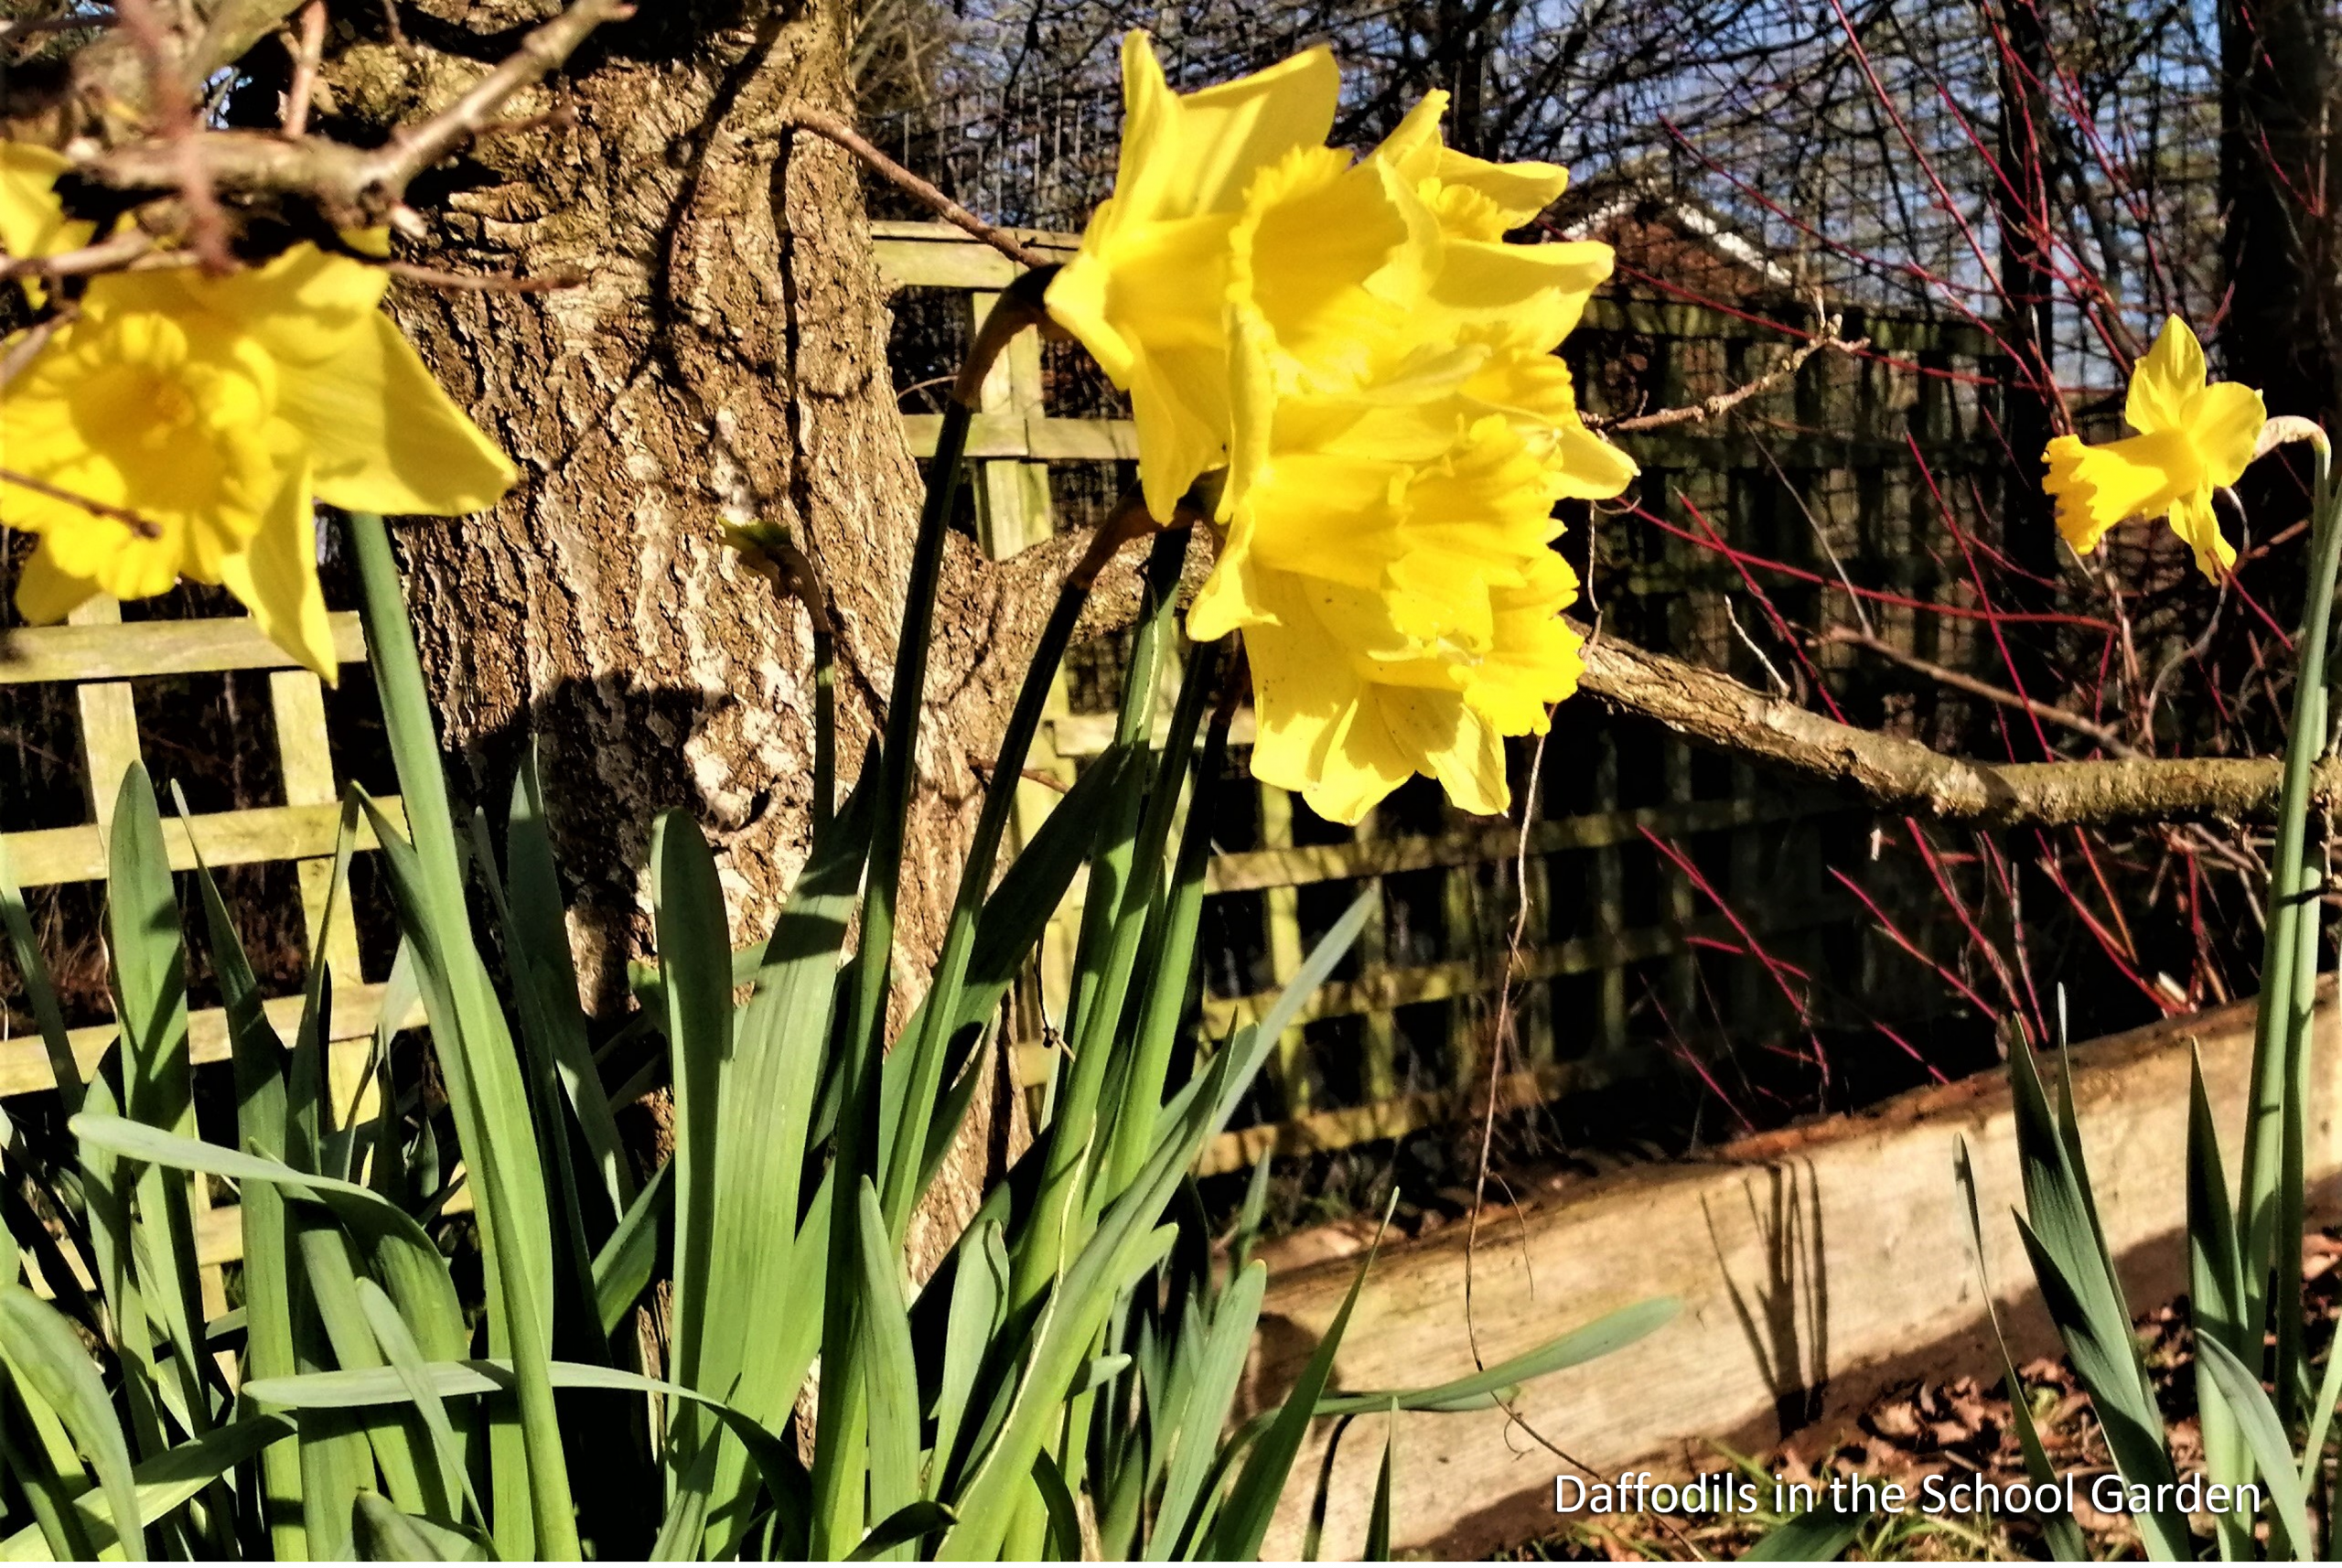 Daffodils in the School Garden